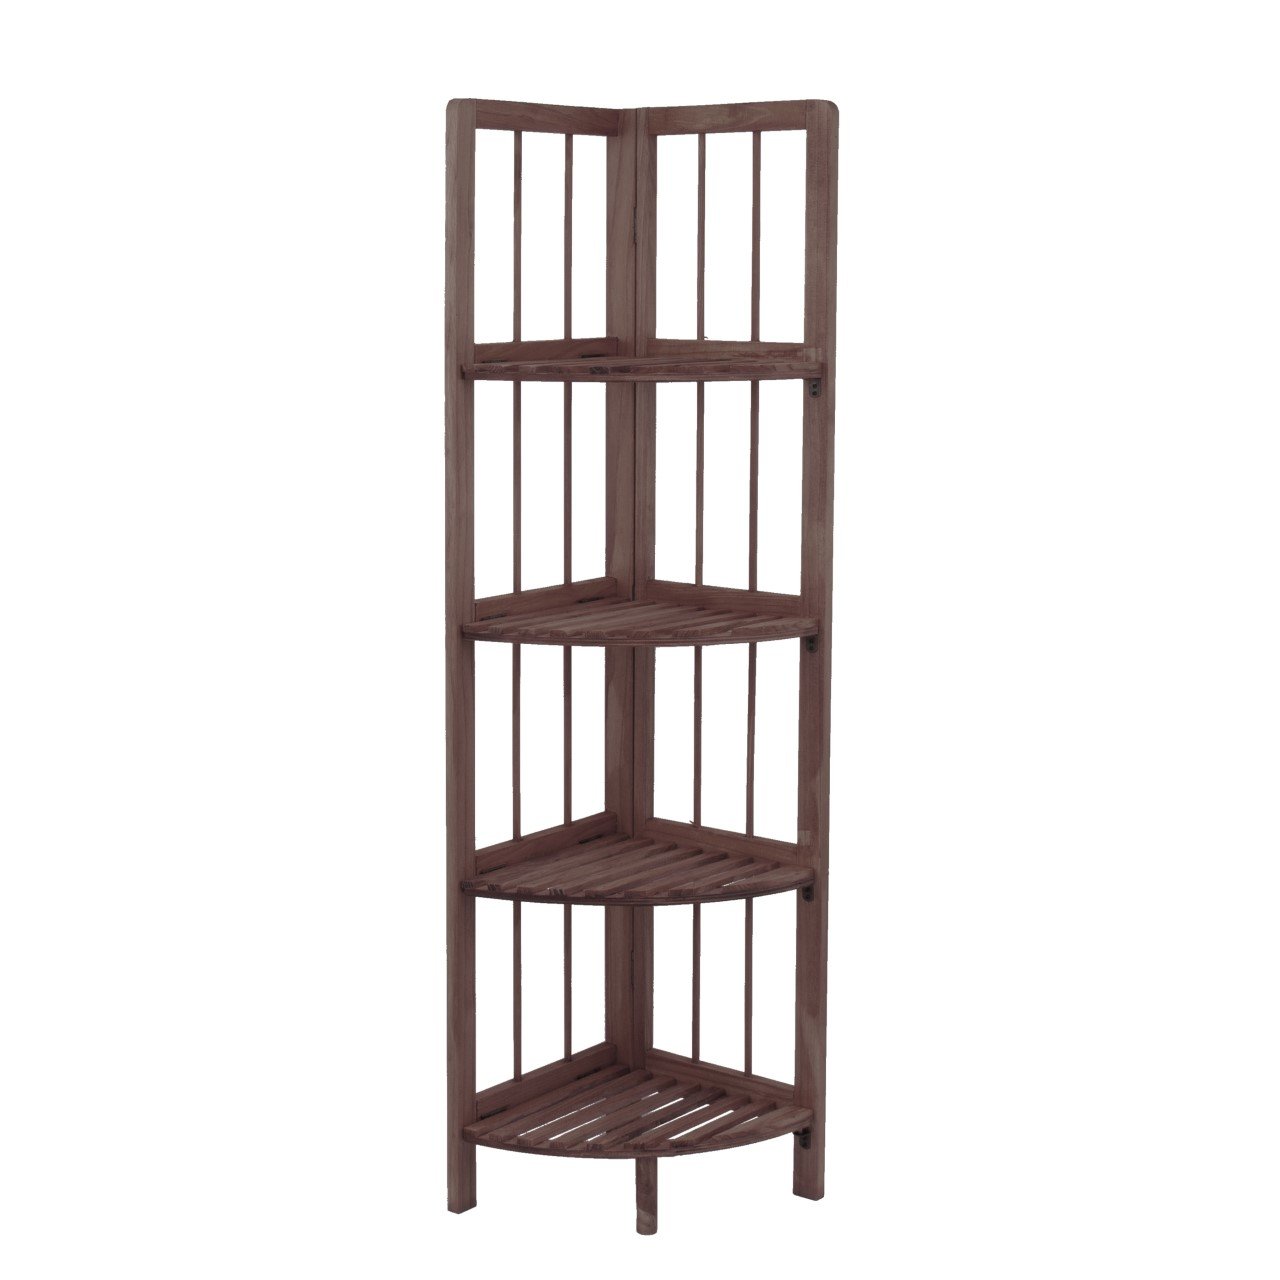 4 Tier Coffee Wooden Corner Rack Multipurpose Use Wooden Rack 28 x 26 x 110cm 8787 (Parcel Rate)